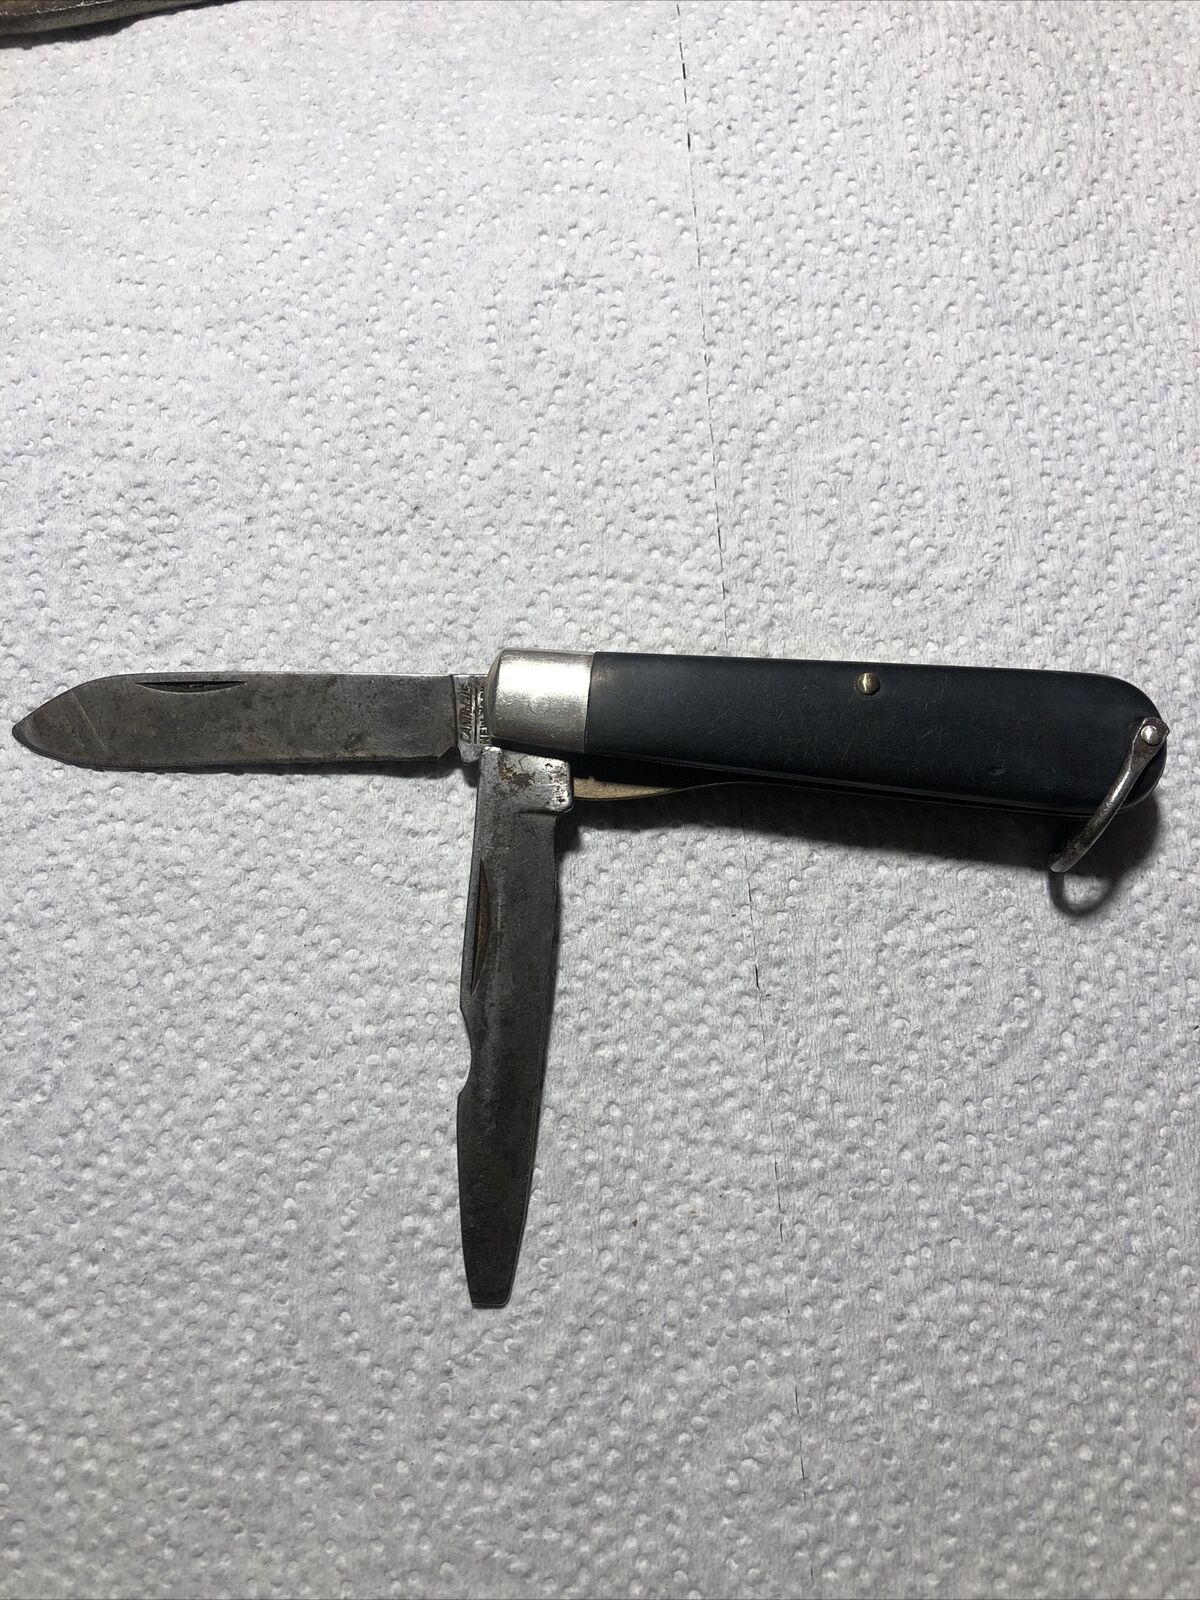 Vintage Military Pocket Knife 2 Blade CAMILLUS New York Electrician 